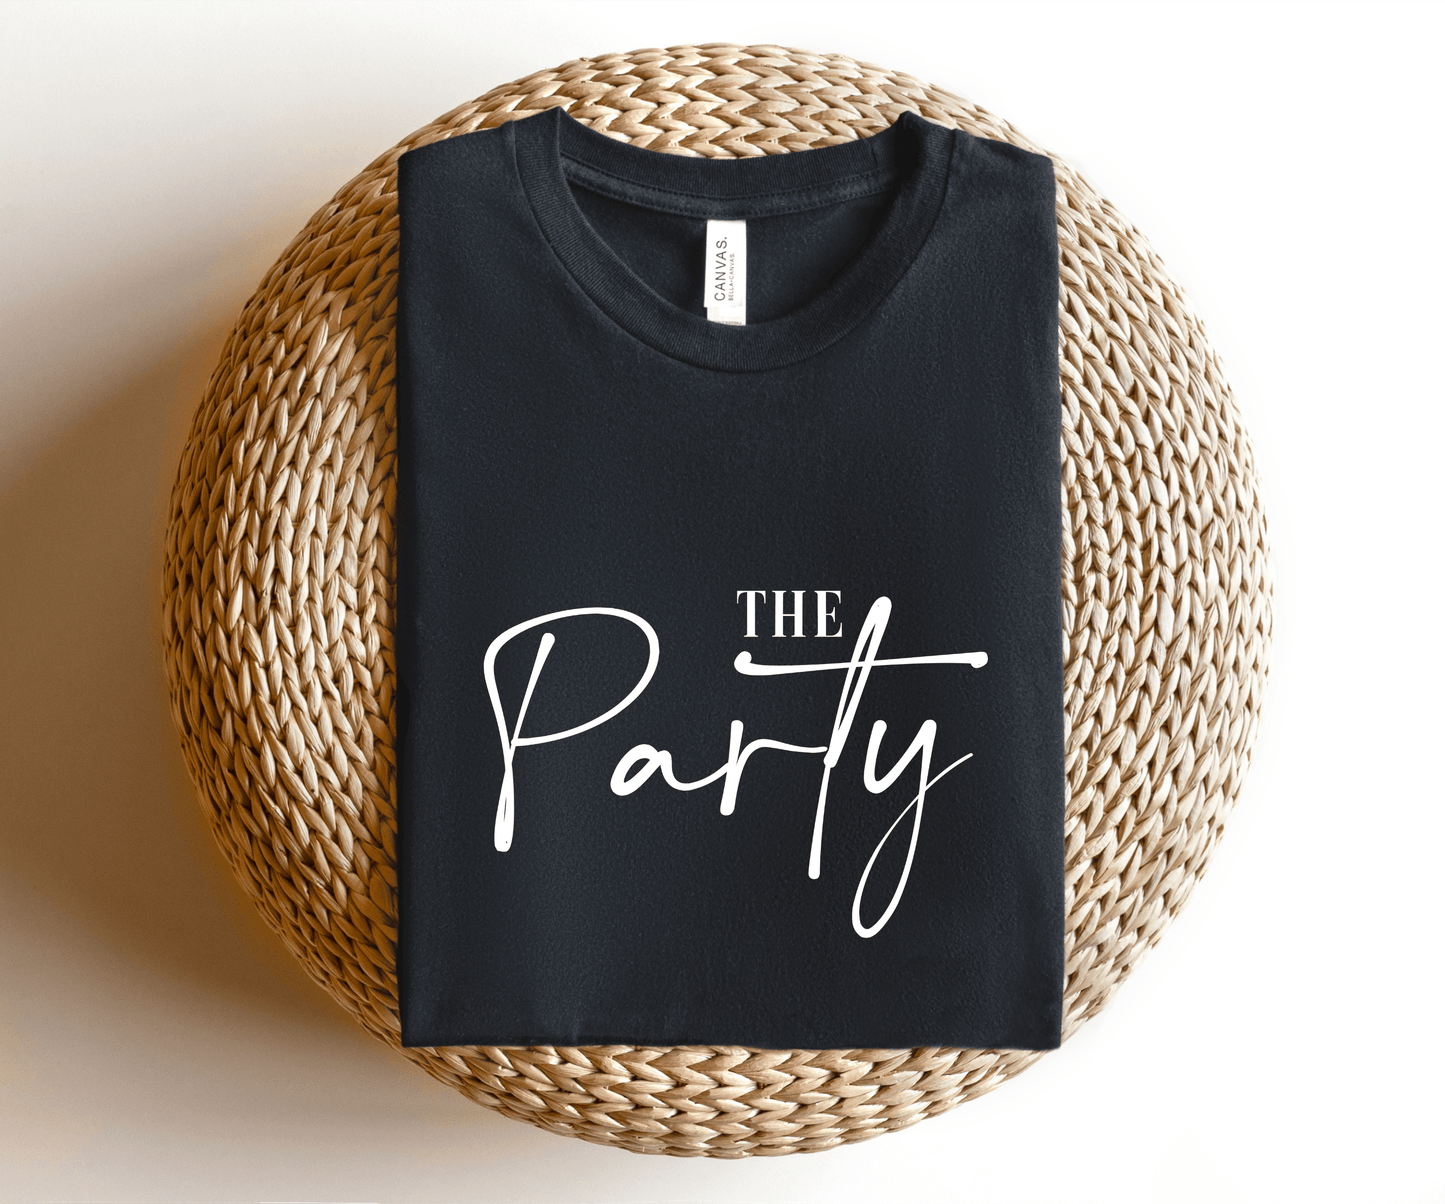 The Party T-shirt - BentleyBlueCo